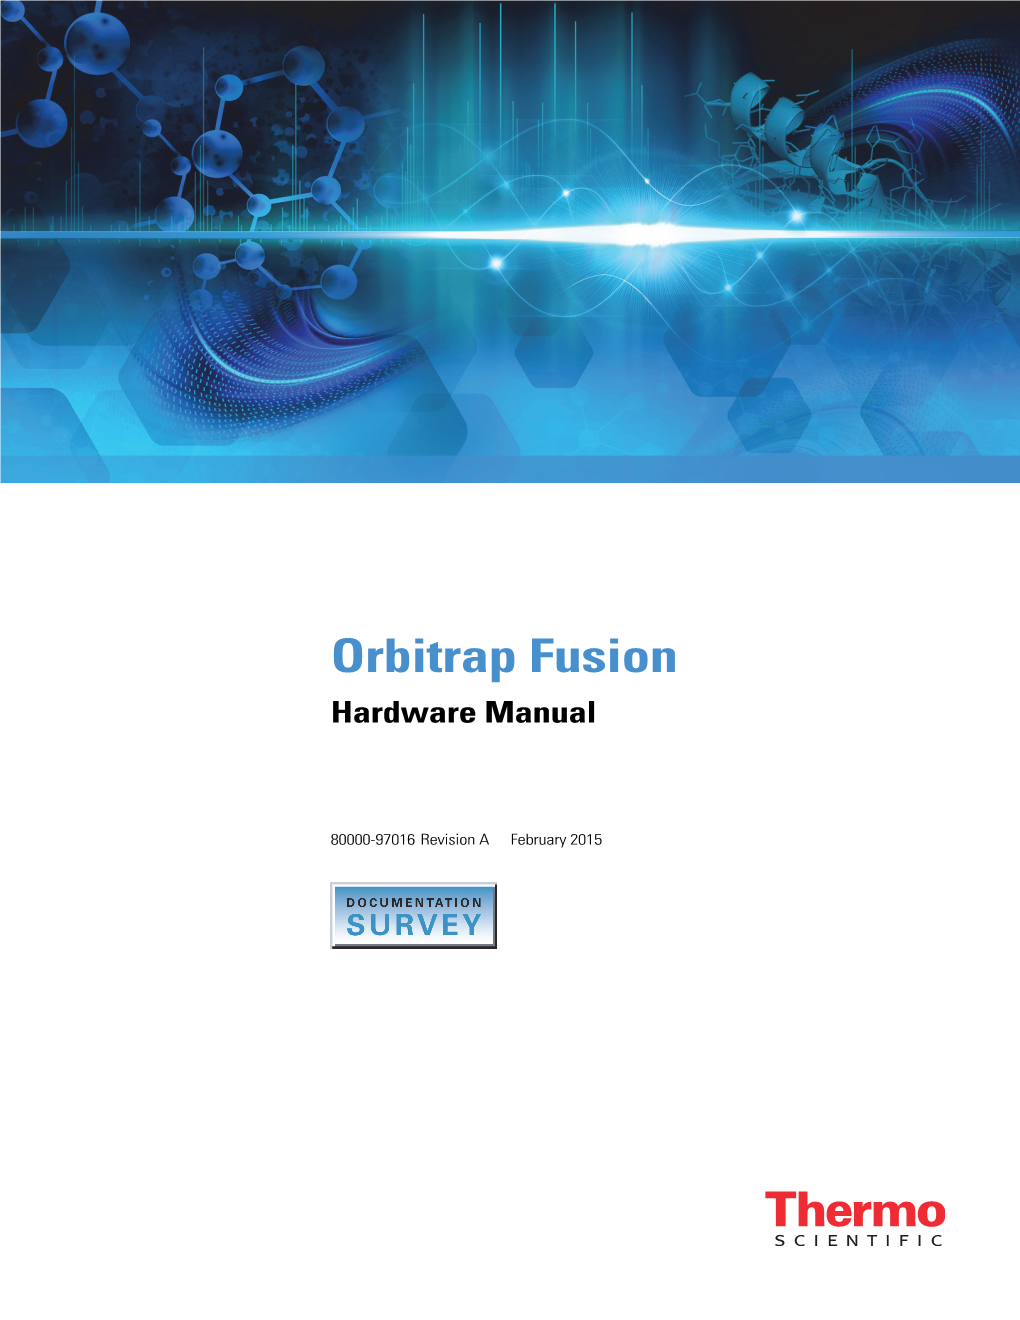 Orbitrap Fusion Hardware Manual Version A